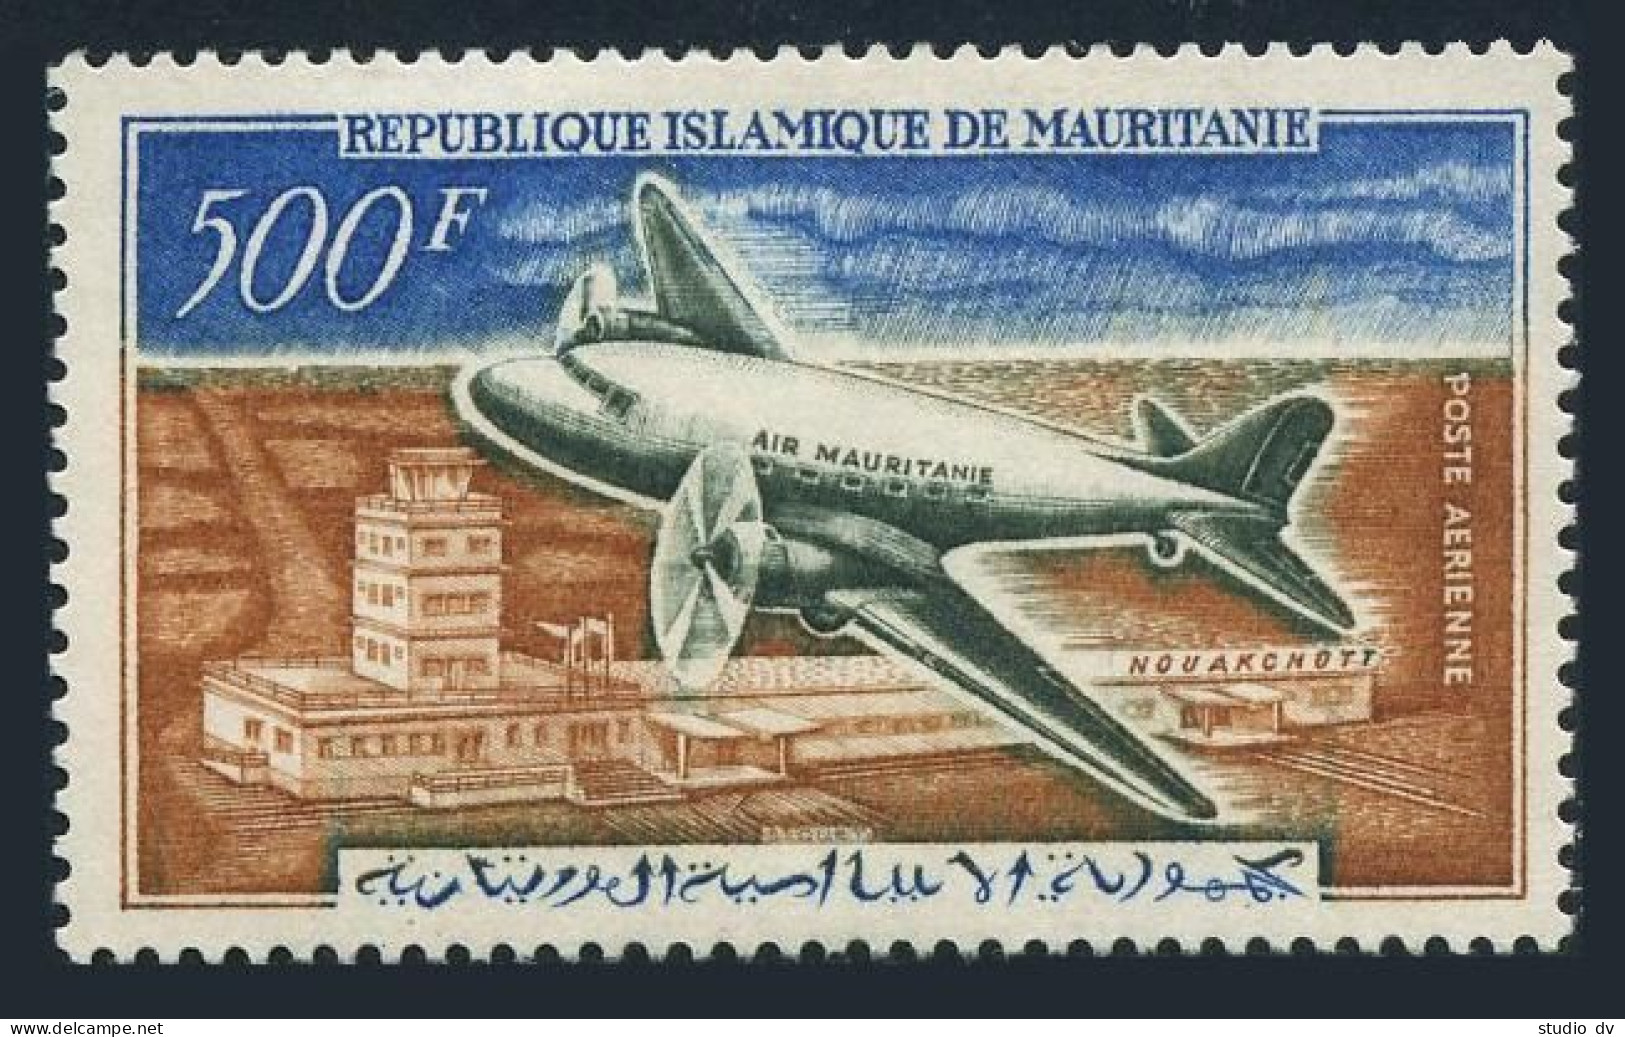 Mauritania C19,lightly Hinged.Michel 201. Plane,Nouakchott Airport.1963. - Mauritanië (1960-...)